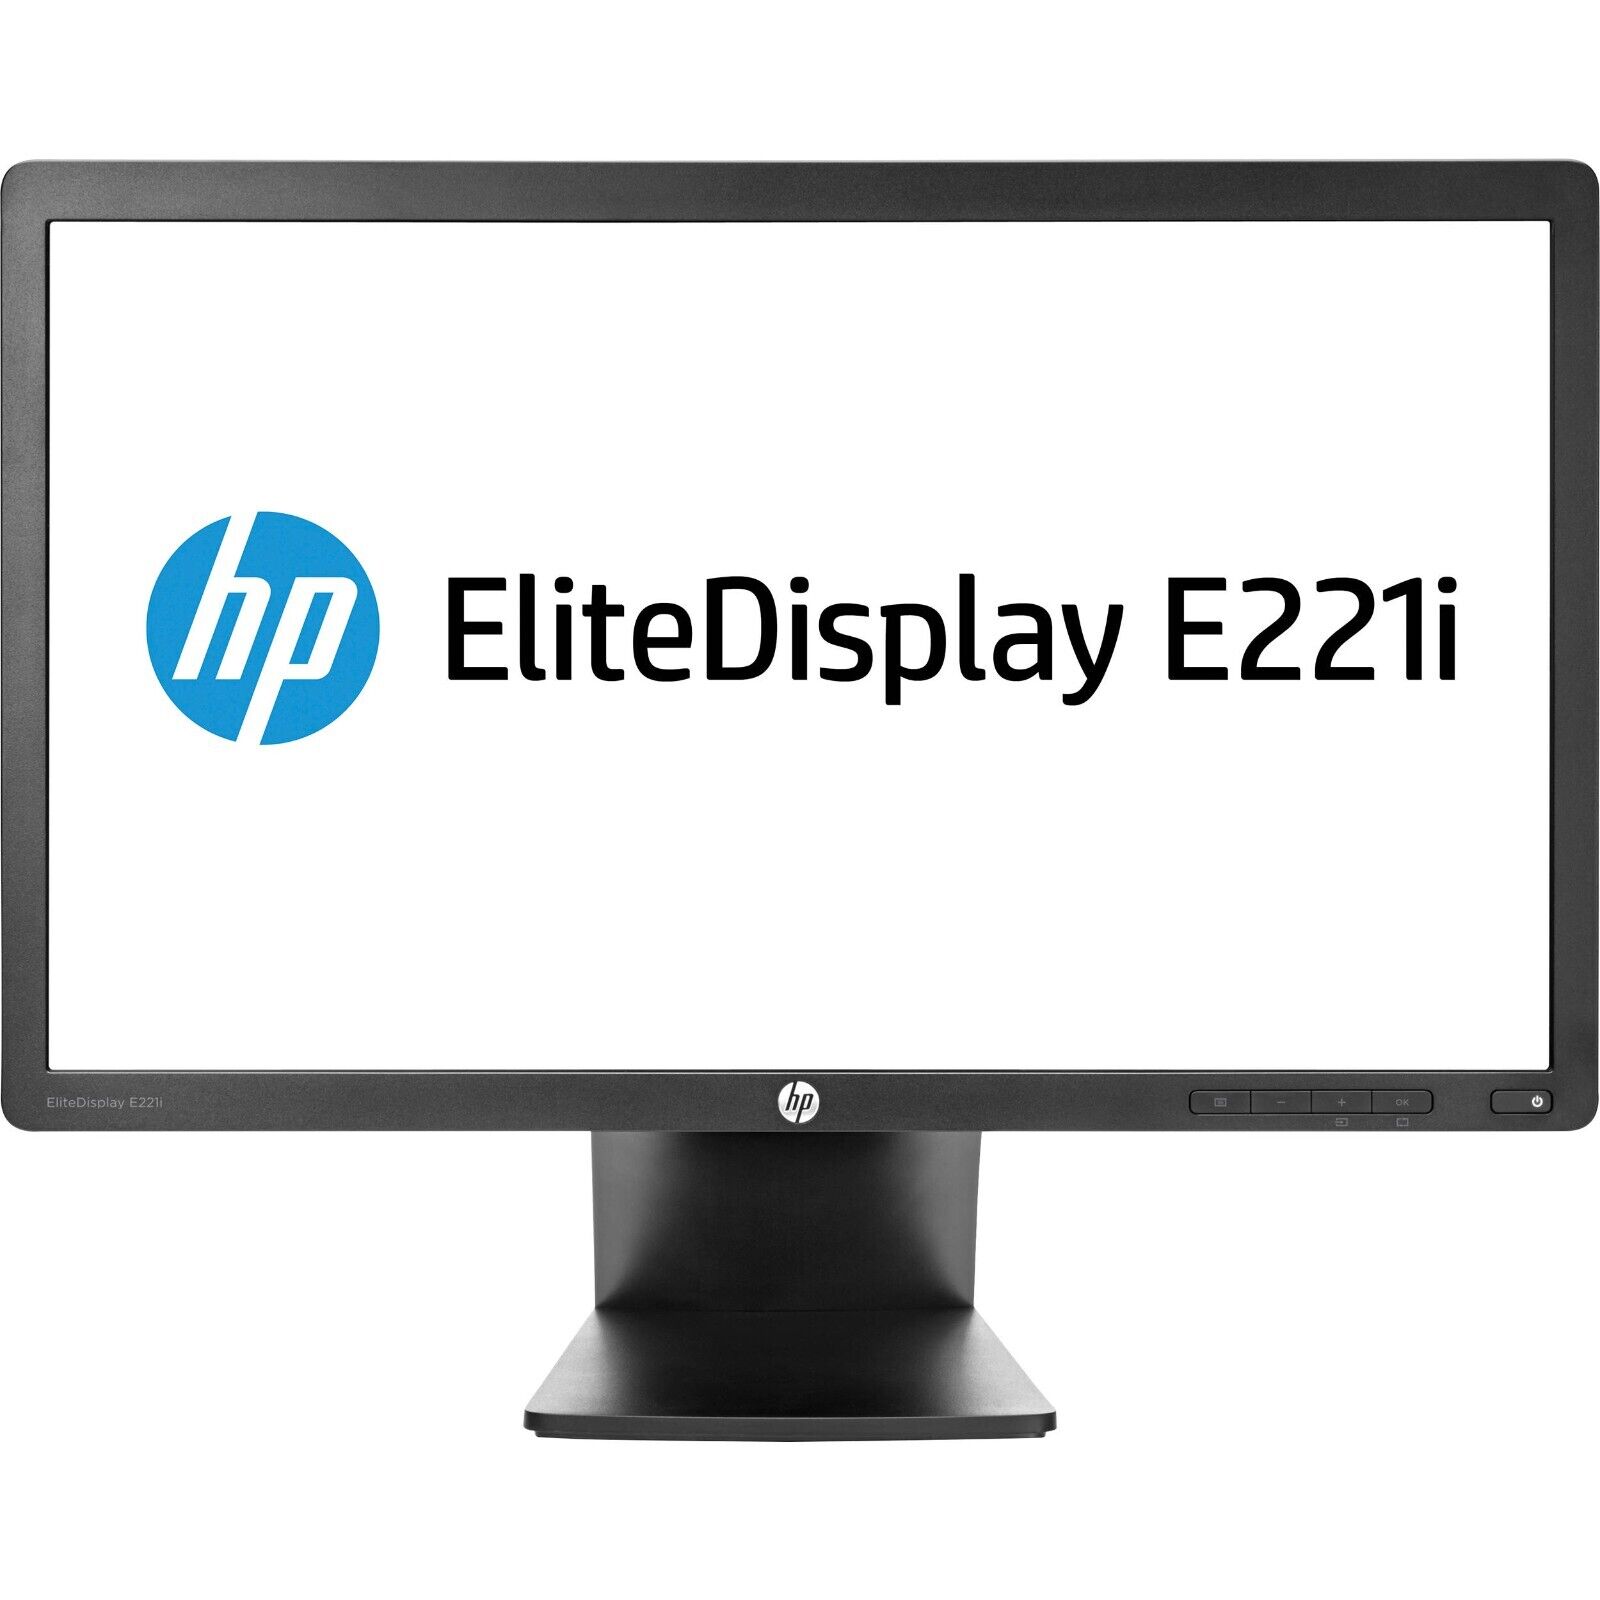 HP EliteDisplay E221i 22” FHD IPS LED LCD Monitor 1920x1080 16:9 60Hz DVI DP VGA